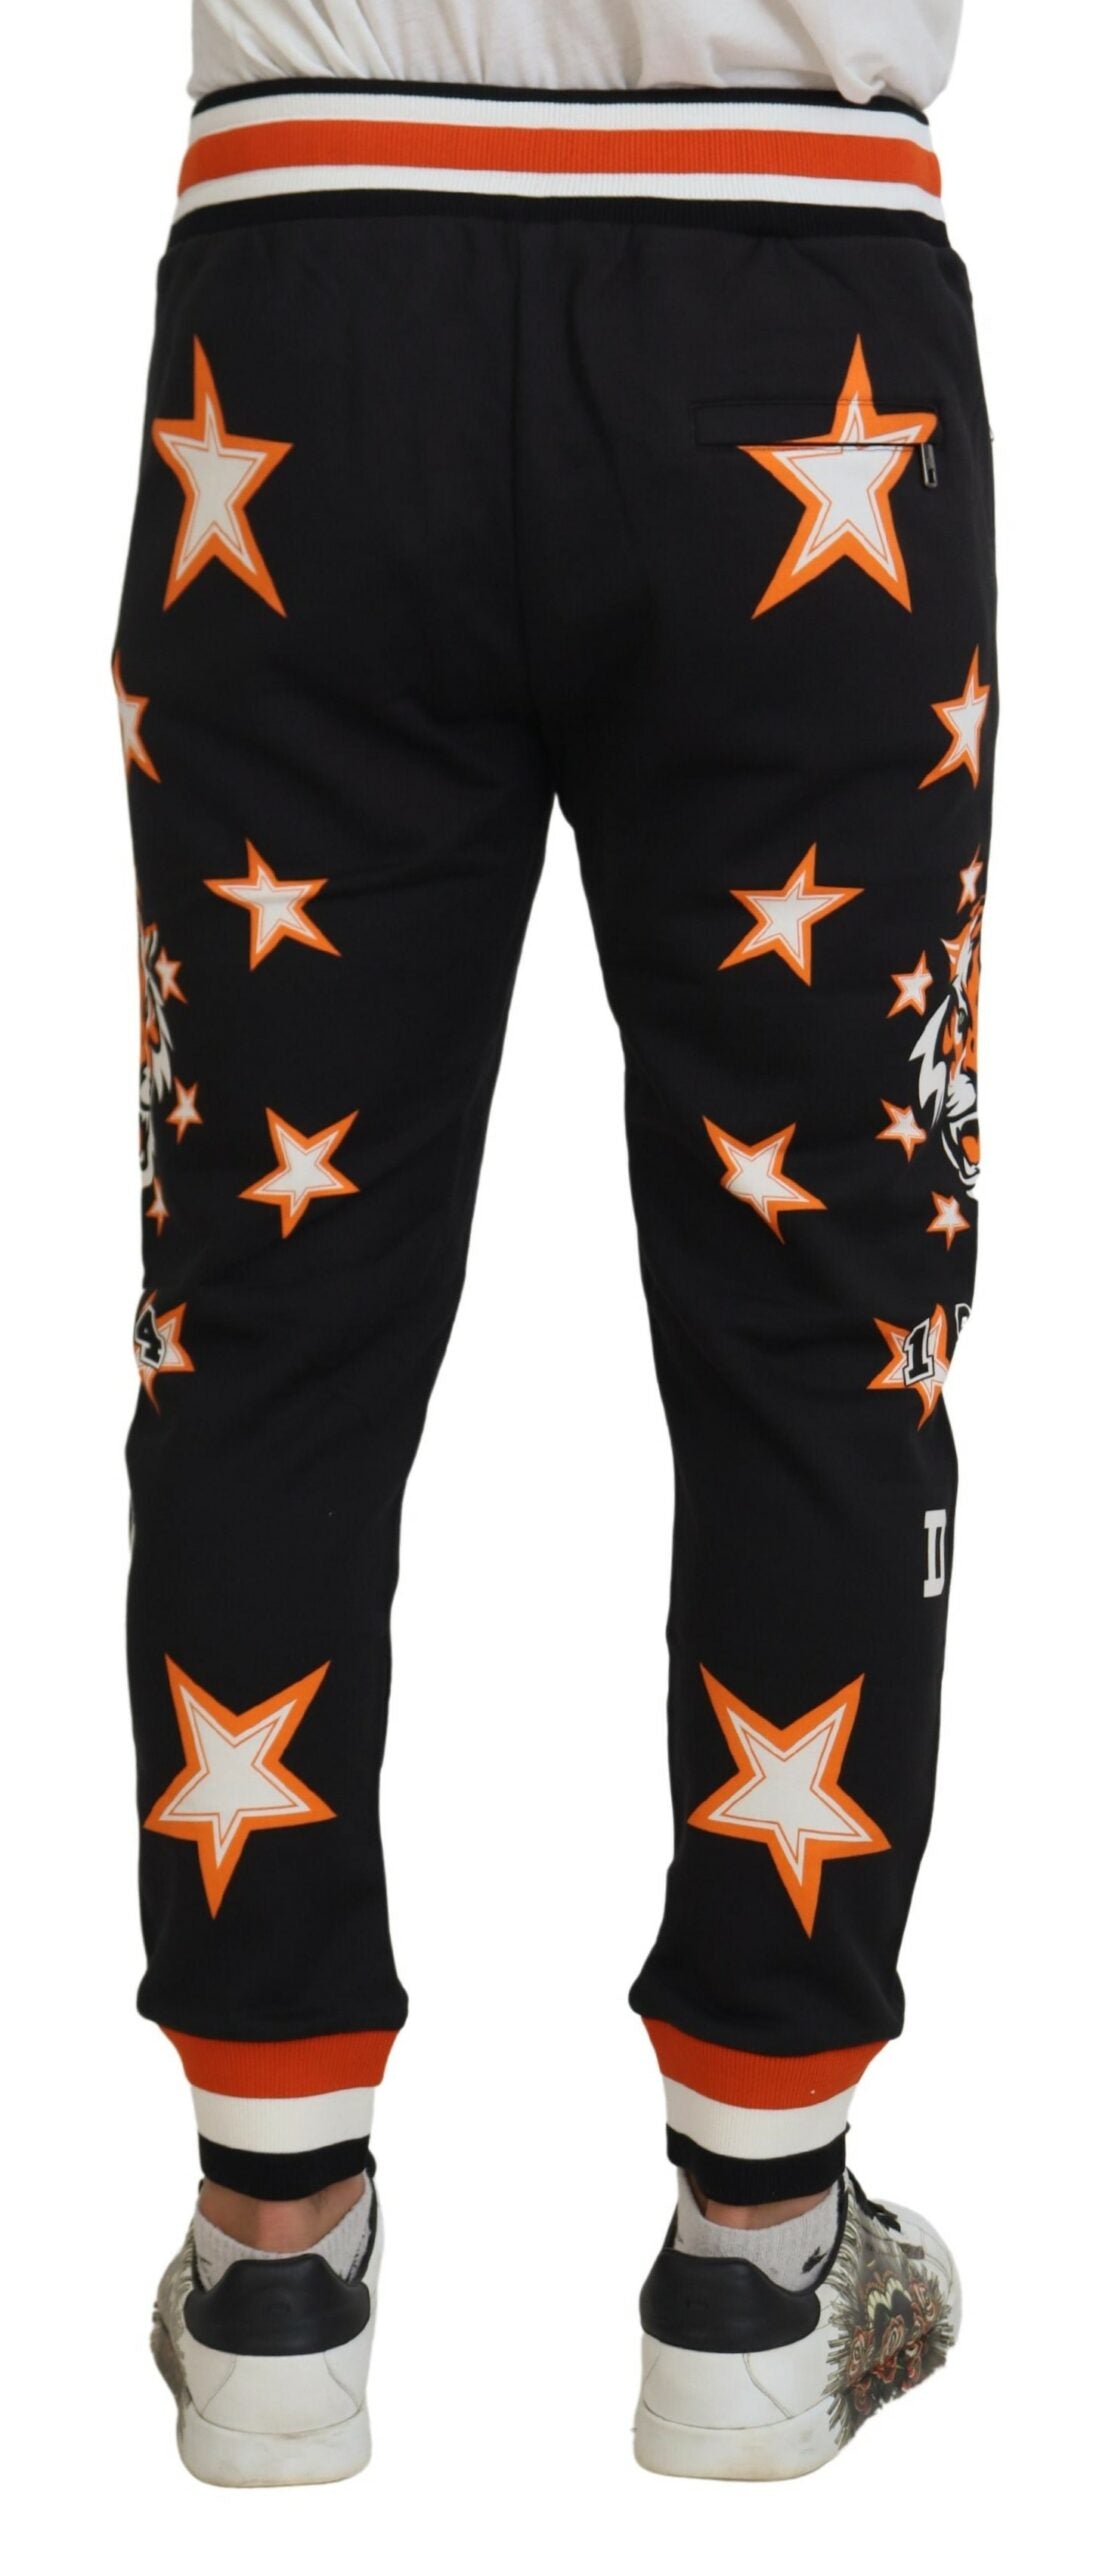 Dolce & Gabbana Black Orange Star Trousers Sport Pants